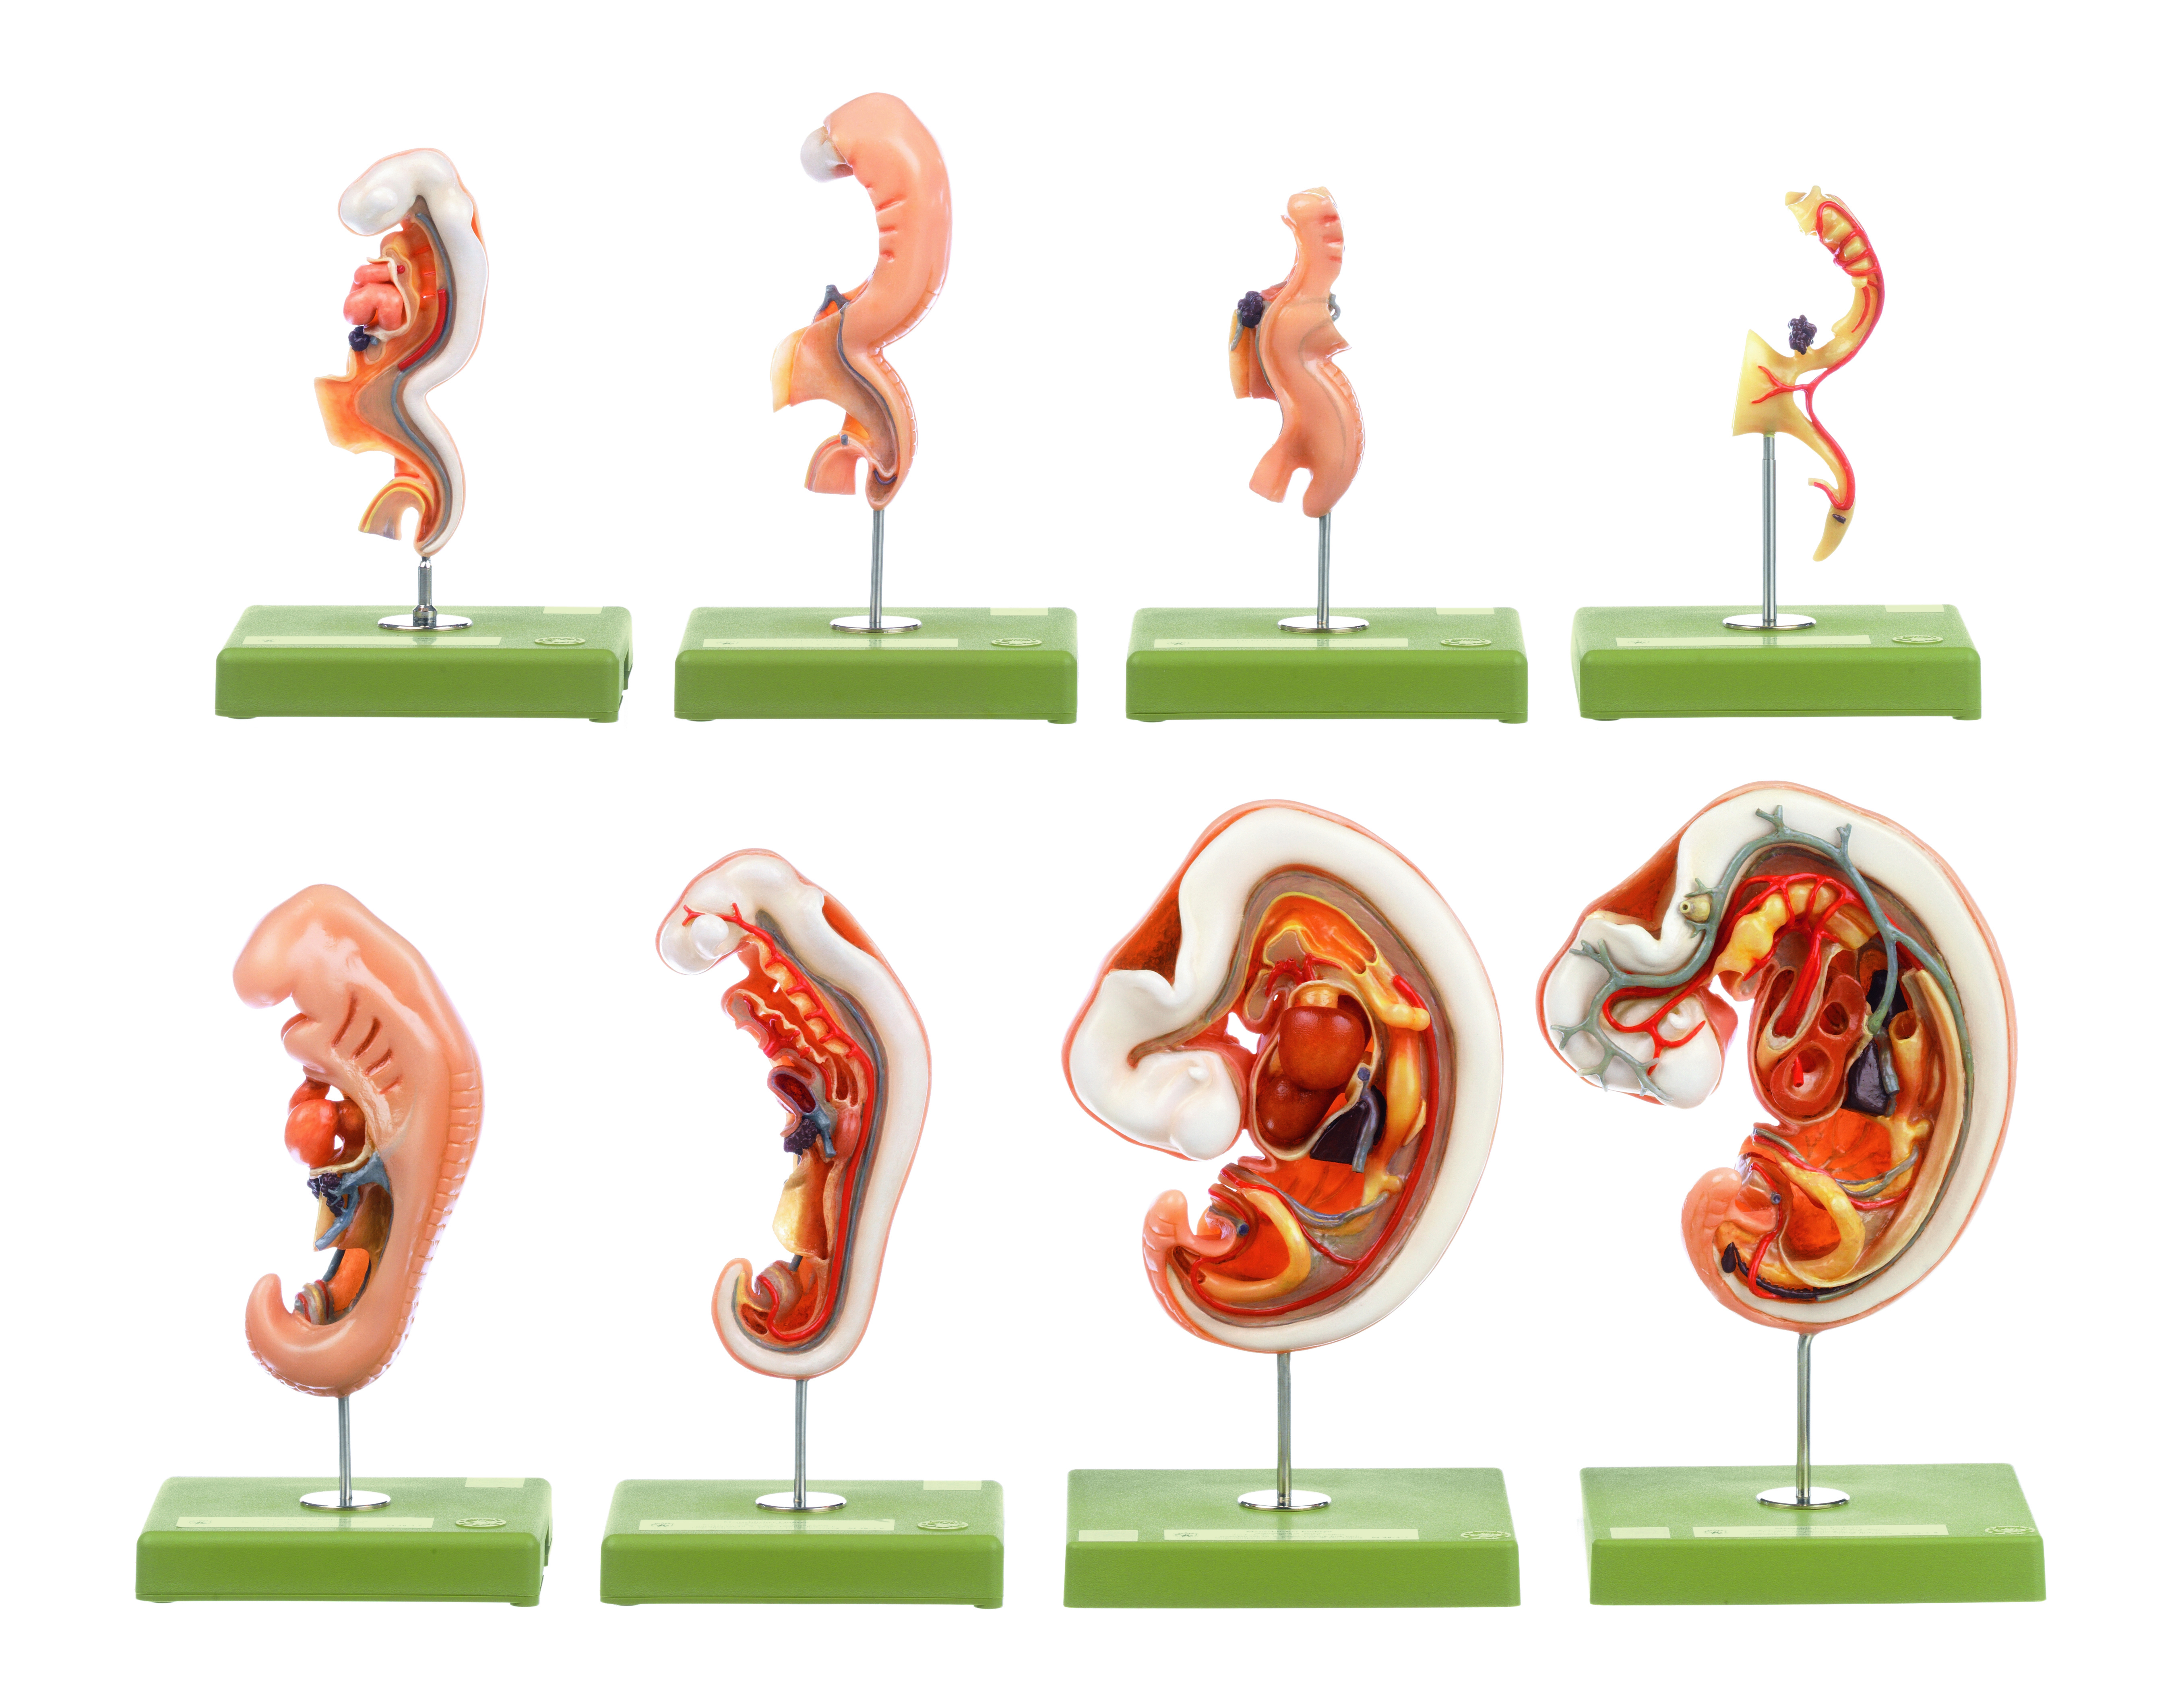 Anatomy of Human Embryos